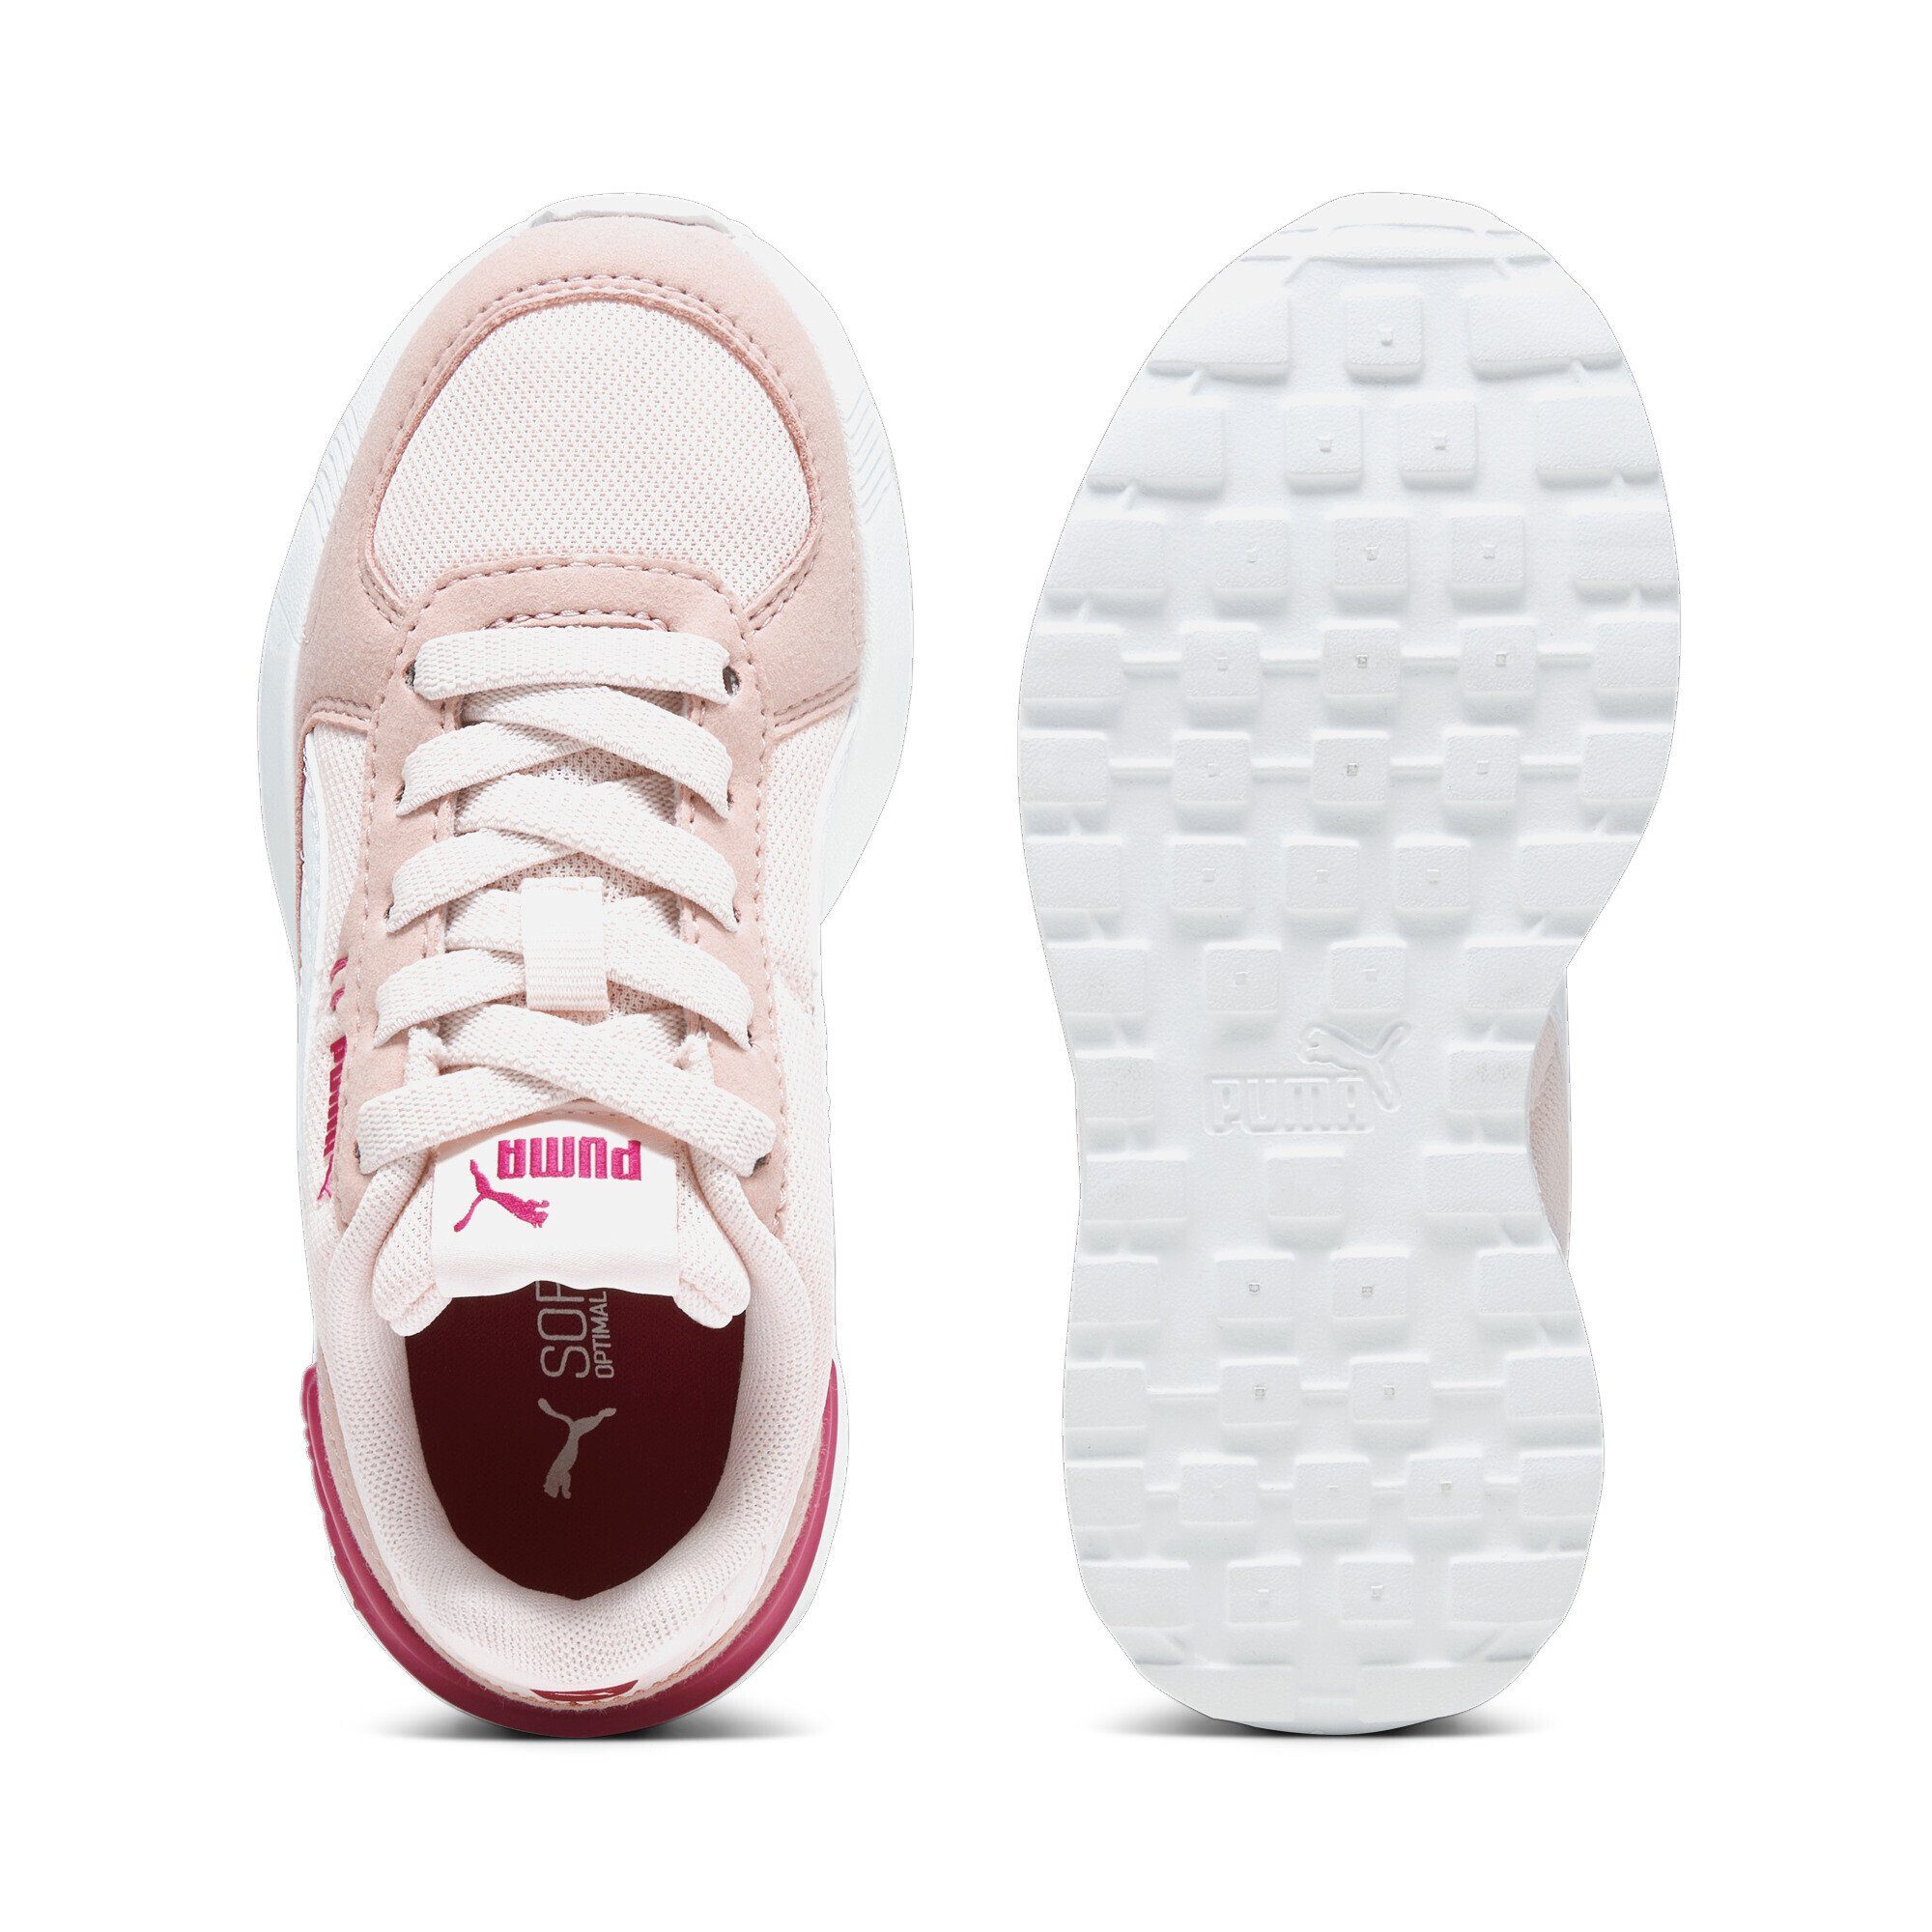 Sneaker Frosty Sneaker PUMA White Graviton Jugendliche Future Pinktastic AC Pink